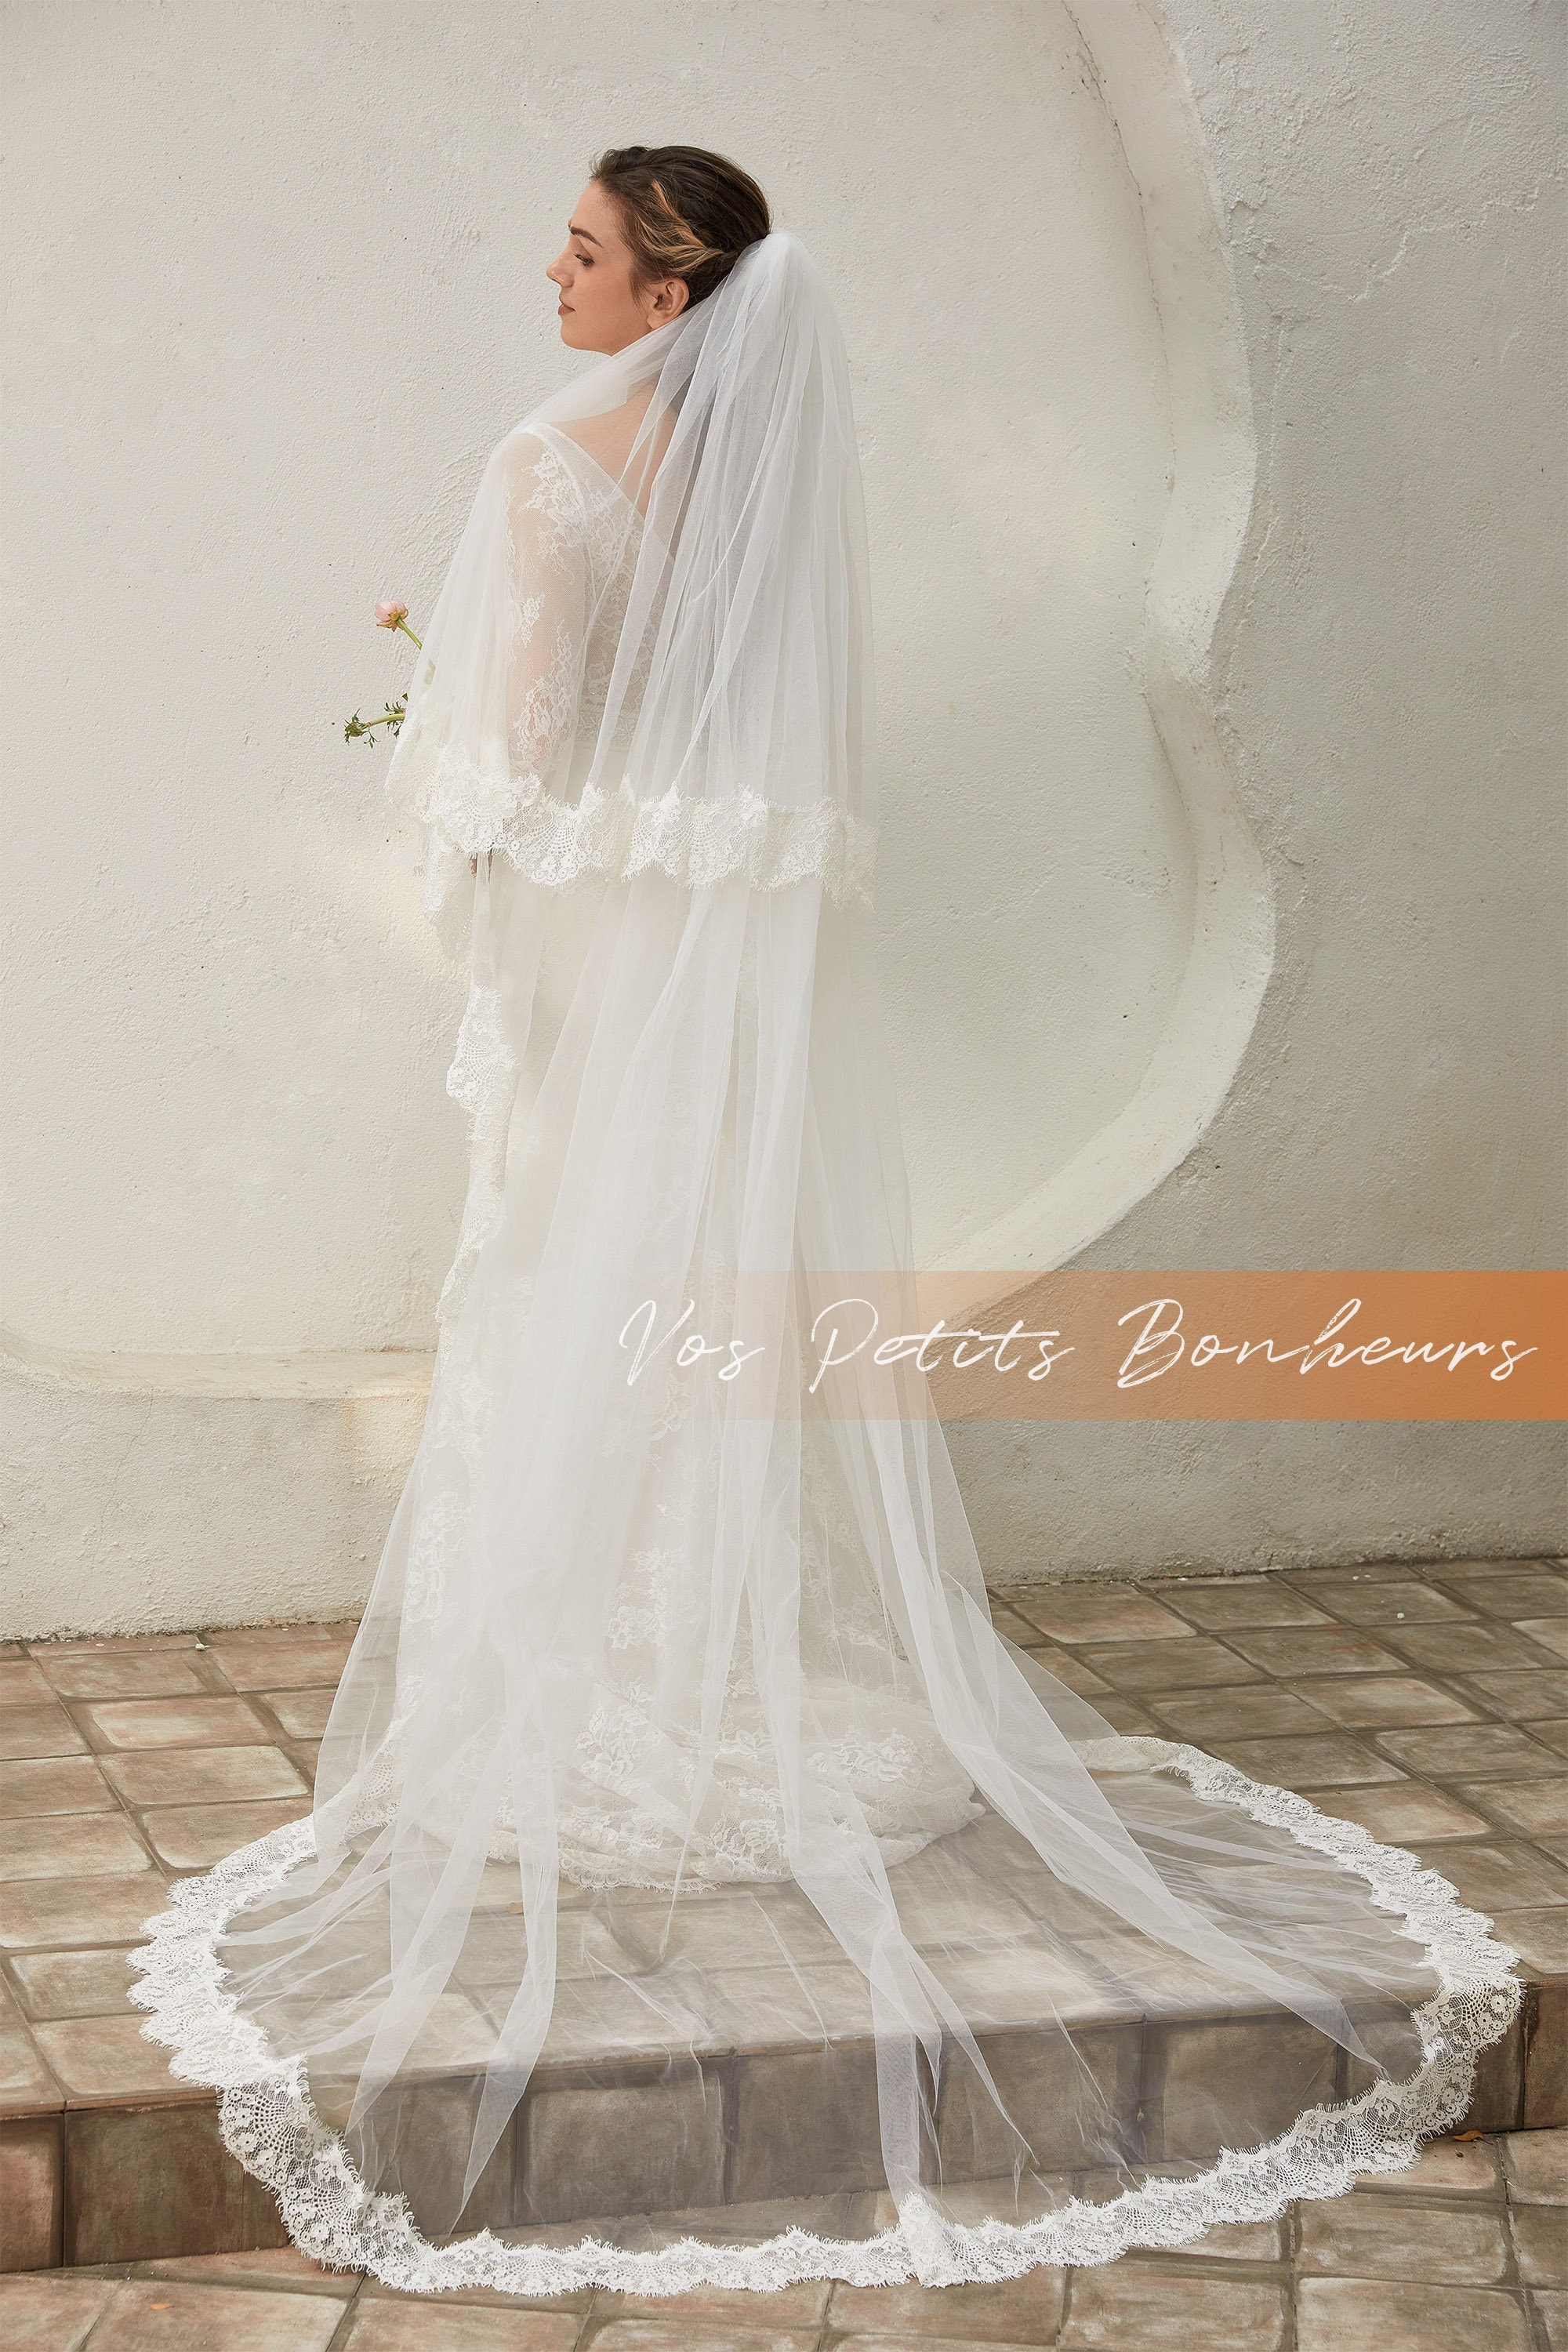 Eaytmo Lace Wedding Veils Ivory Bridal Veil 2 Tier Waist Length